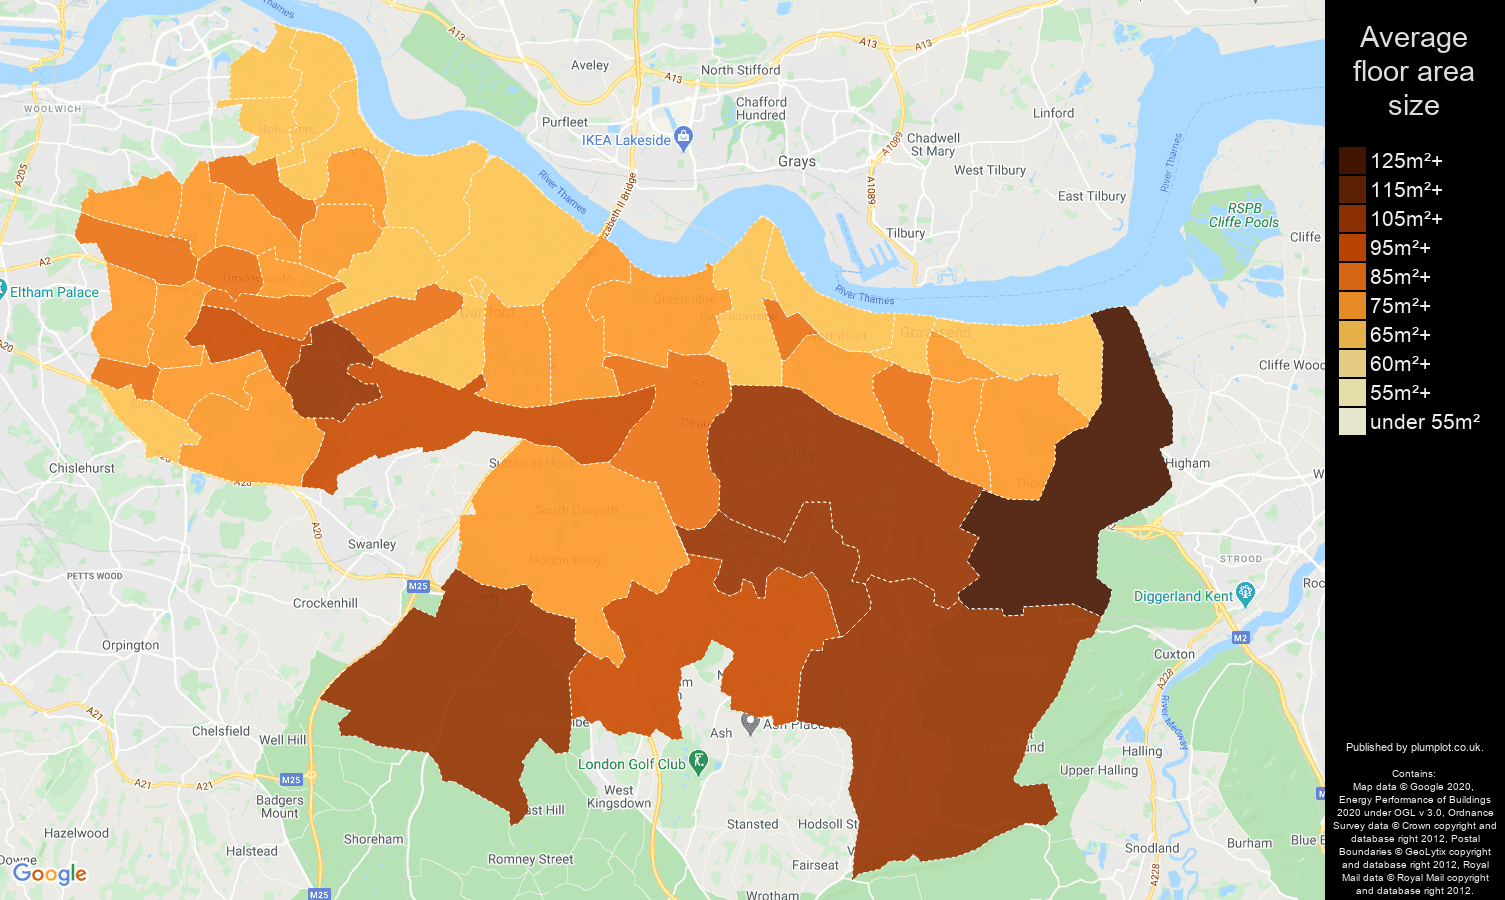 Dartford map of average floor area size of properties